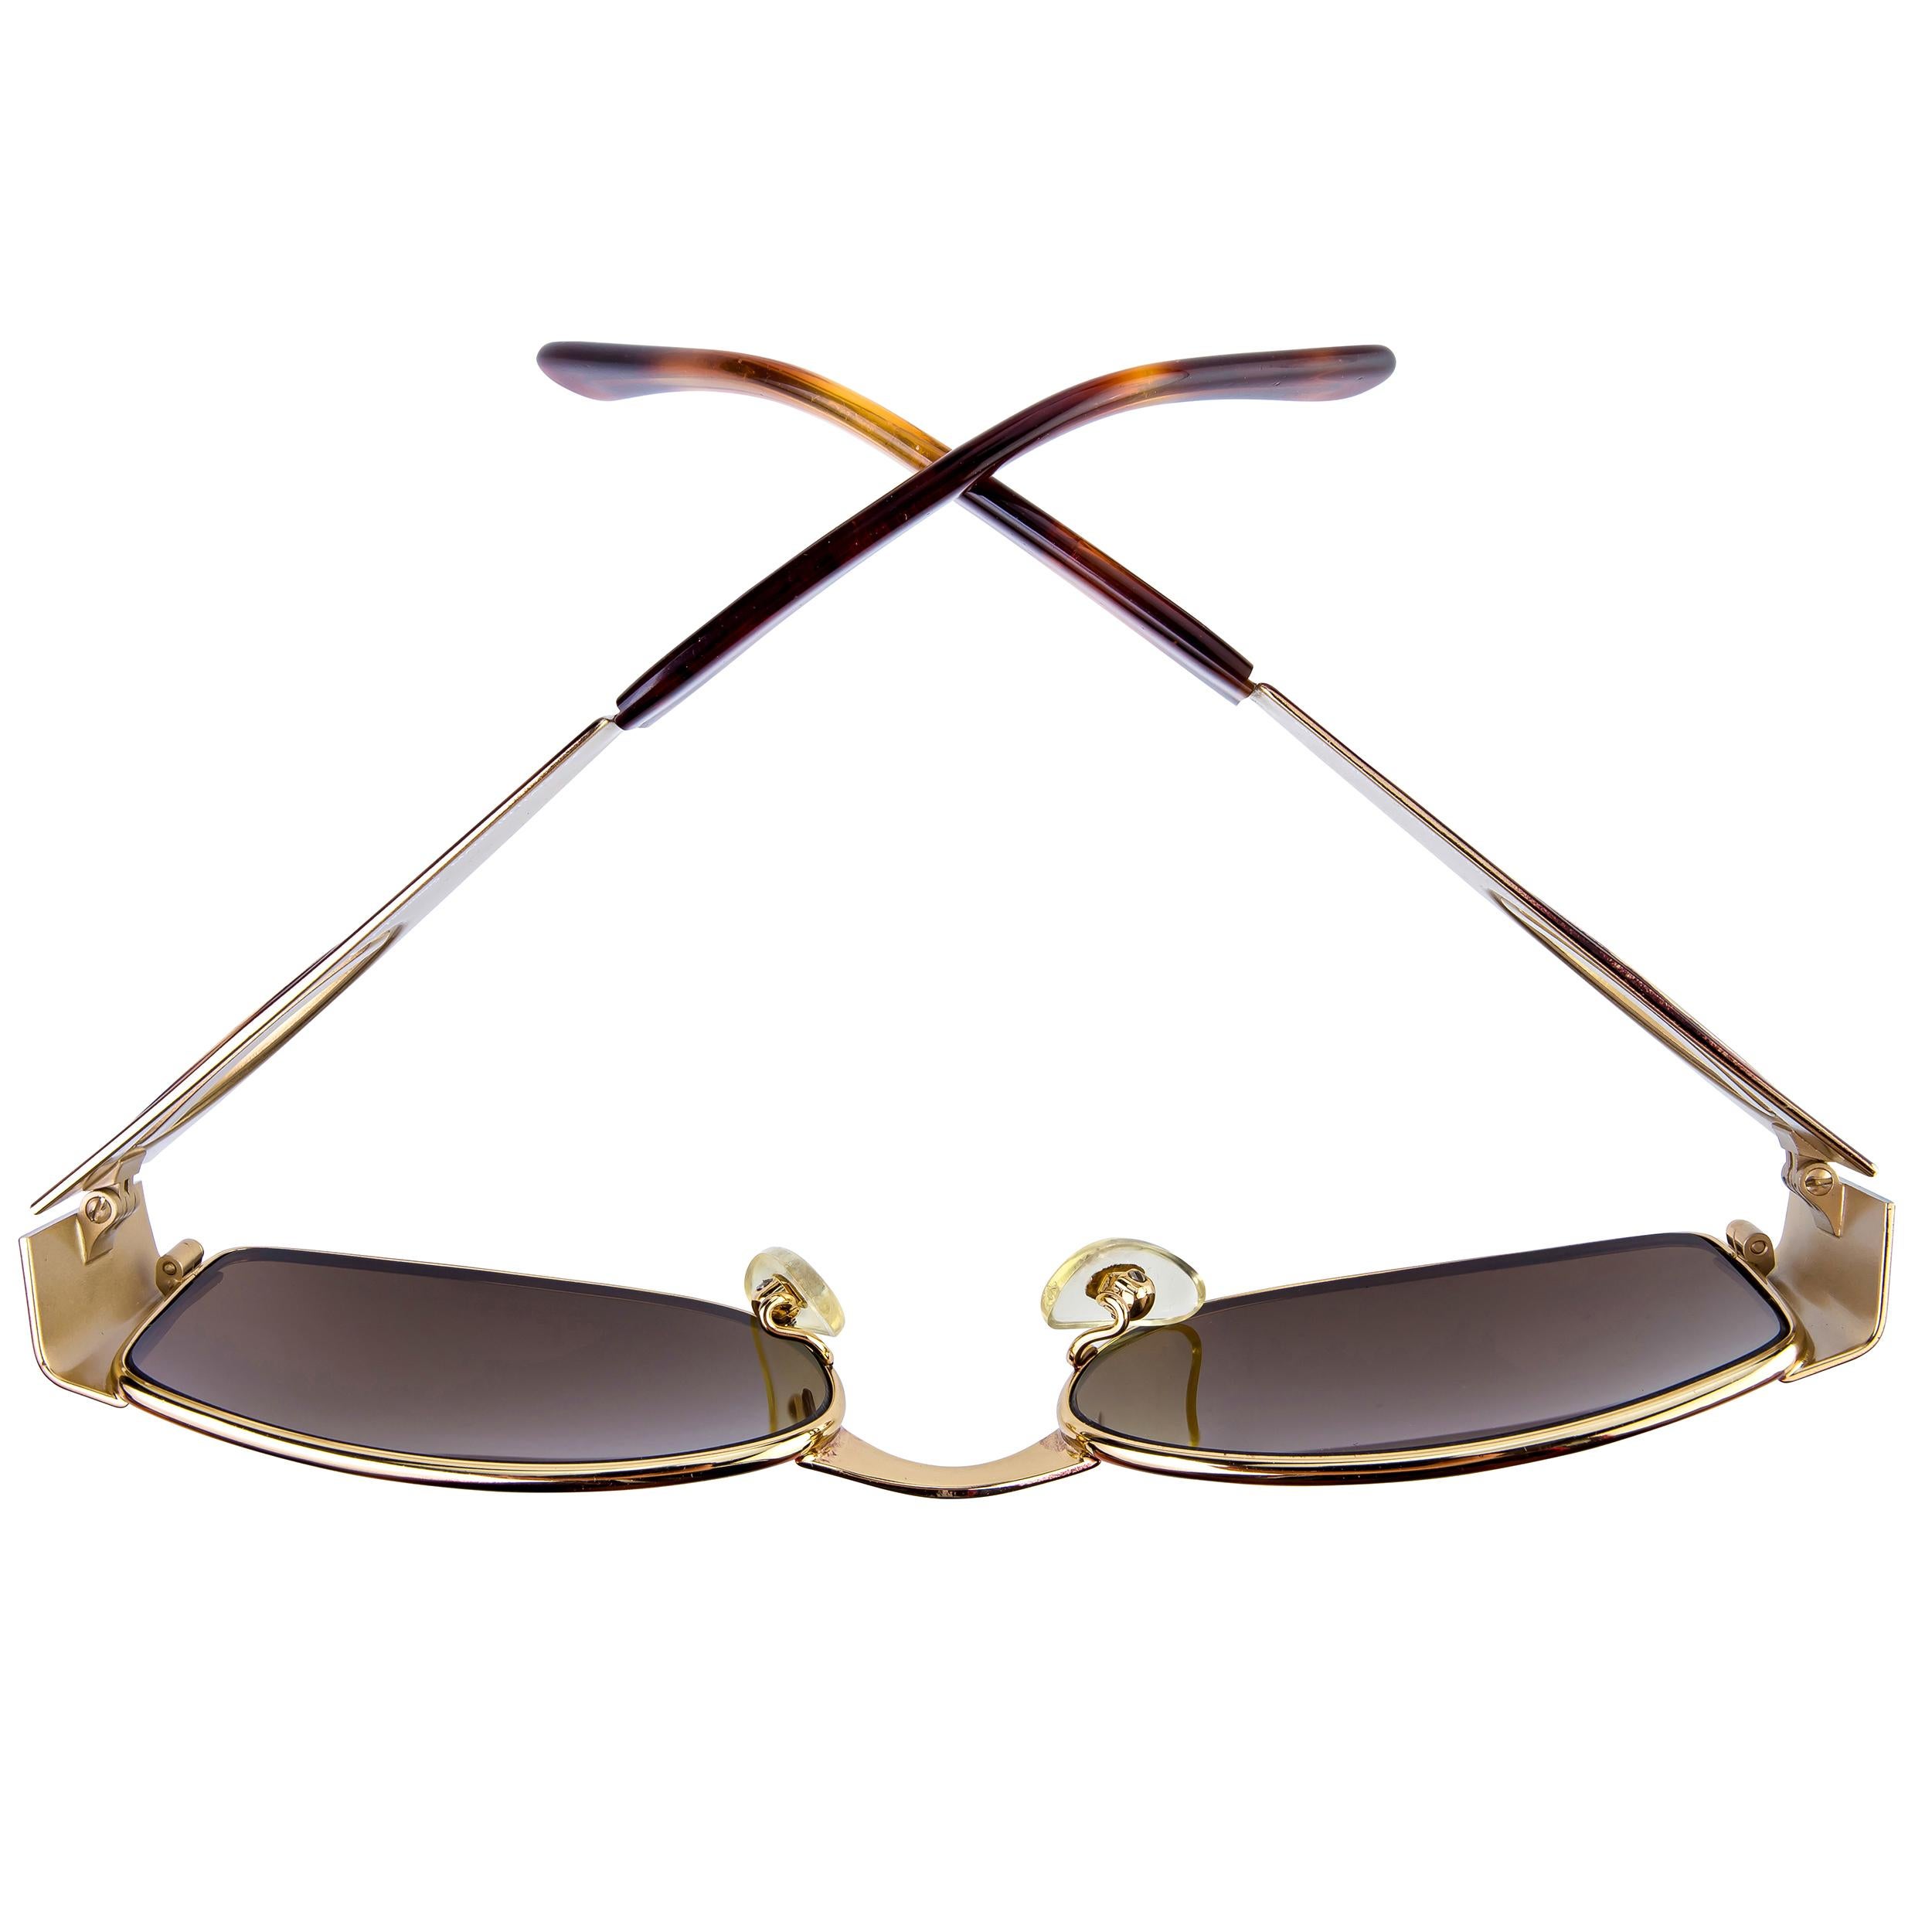 Von Furstenberg vintage sunglasses 80s In New Condition For Sale In Santa Clarita, CA